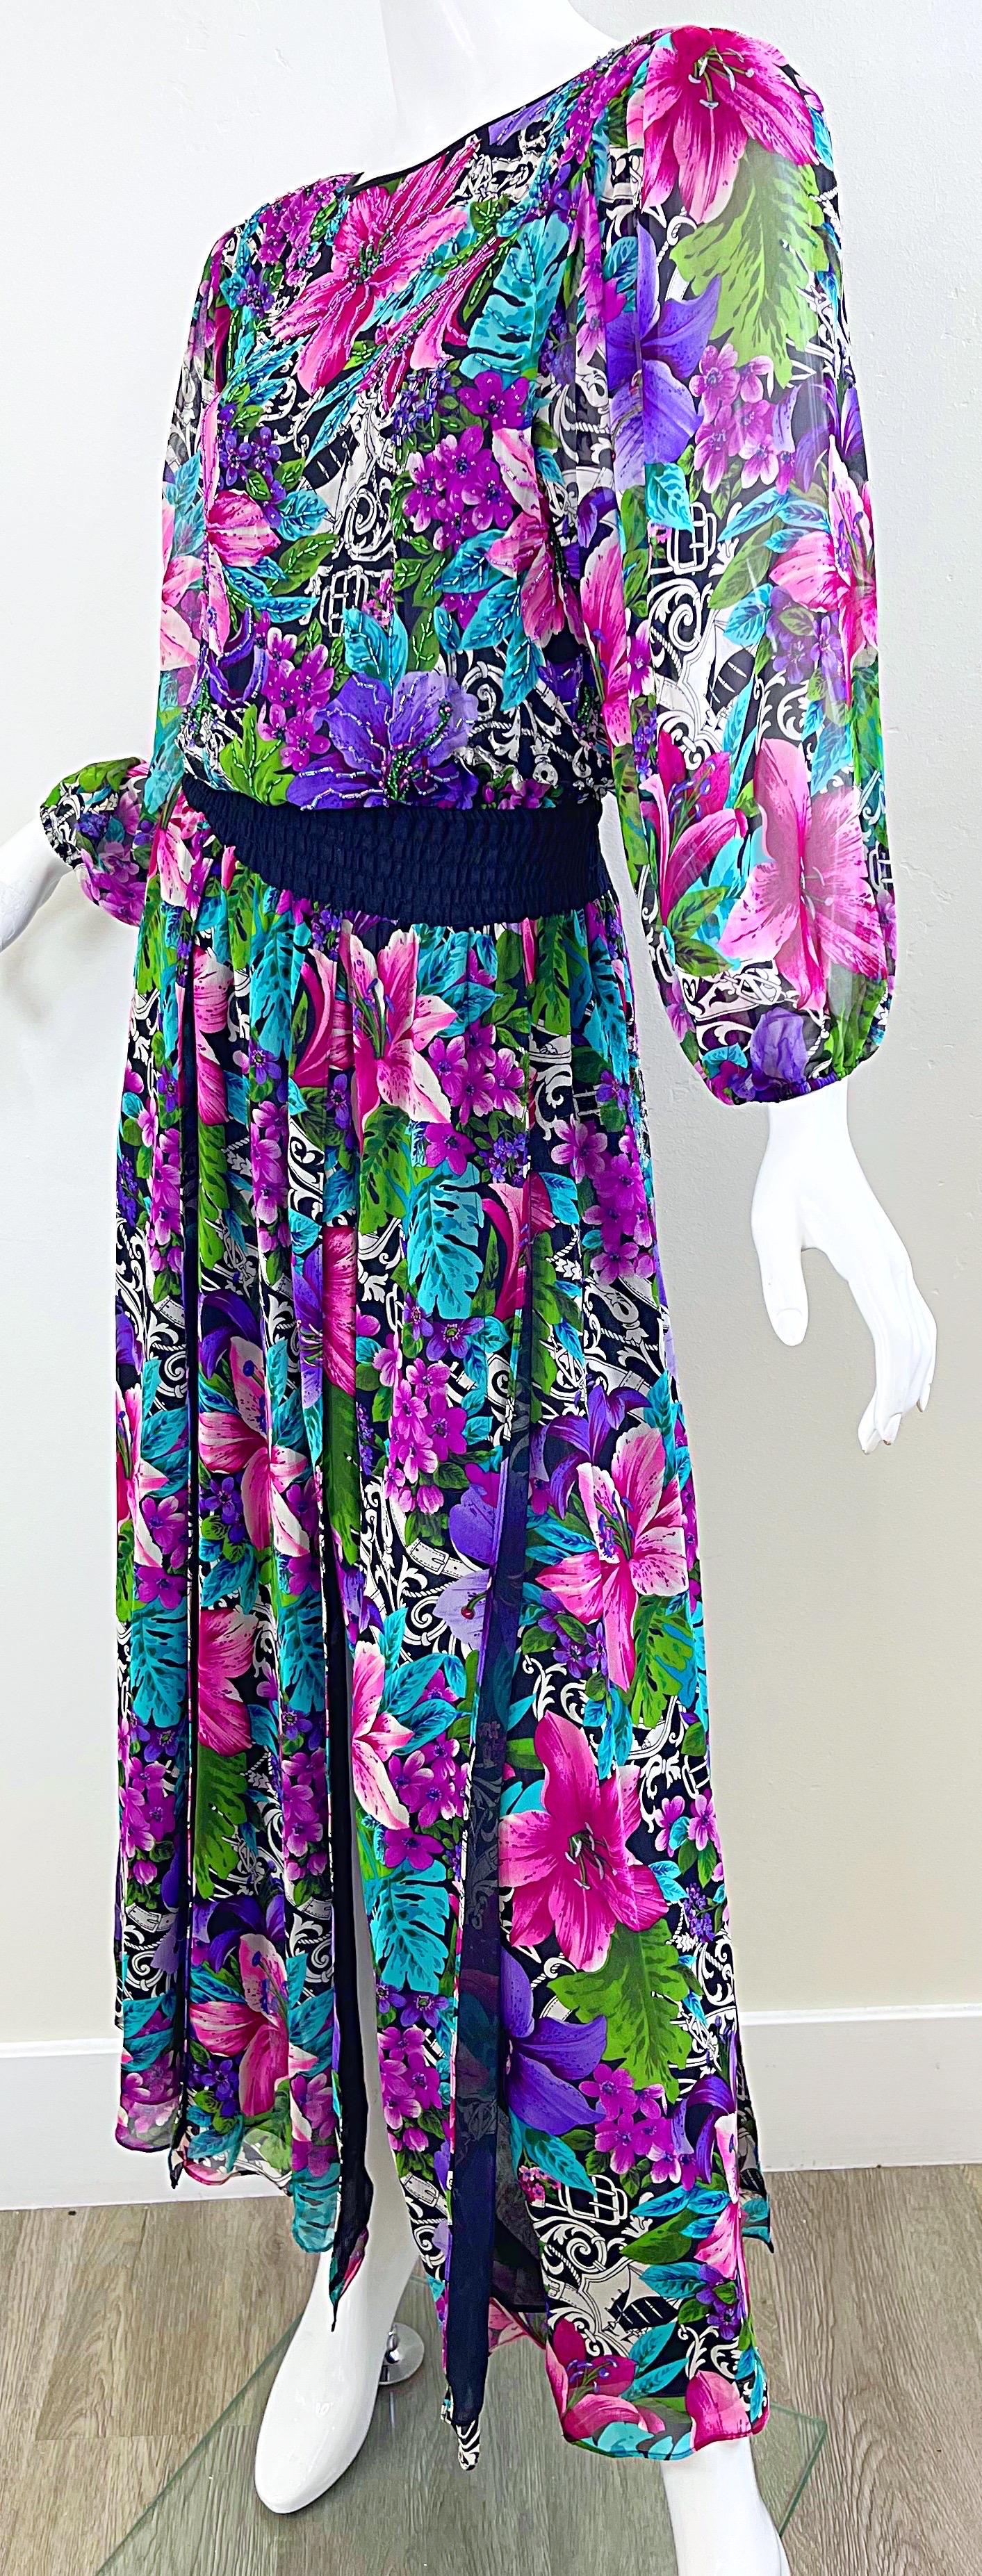 Diane Freis 1980s Silk Chiffon Beaded Tropical Print Vintage 80s Maxi Dress For Sale 1